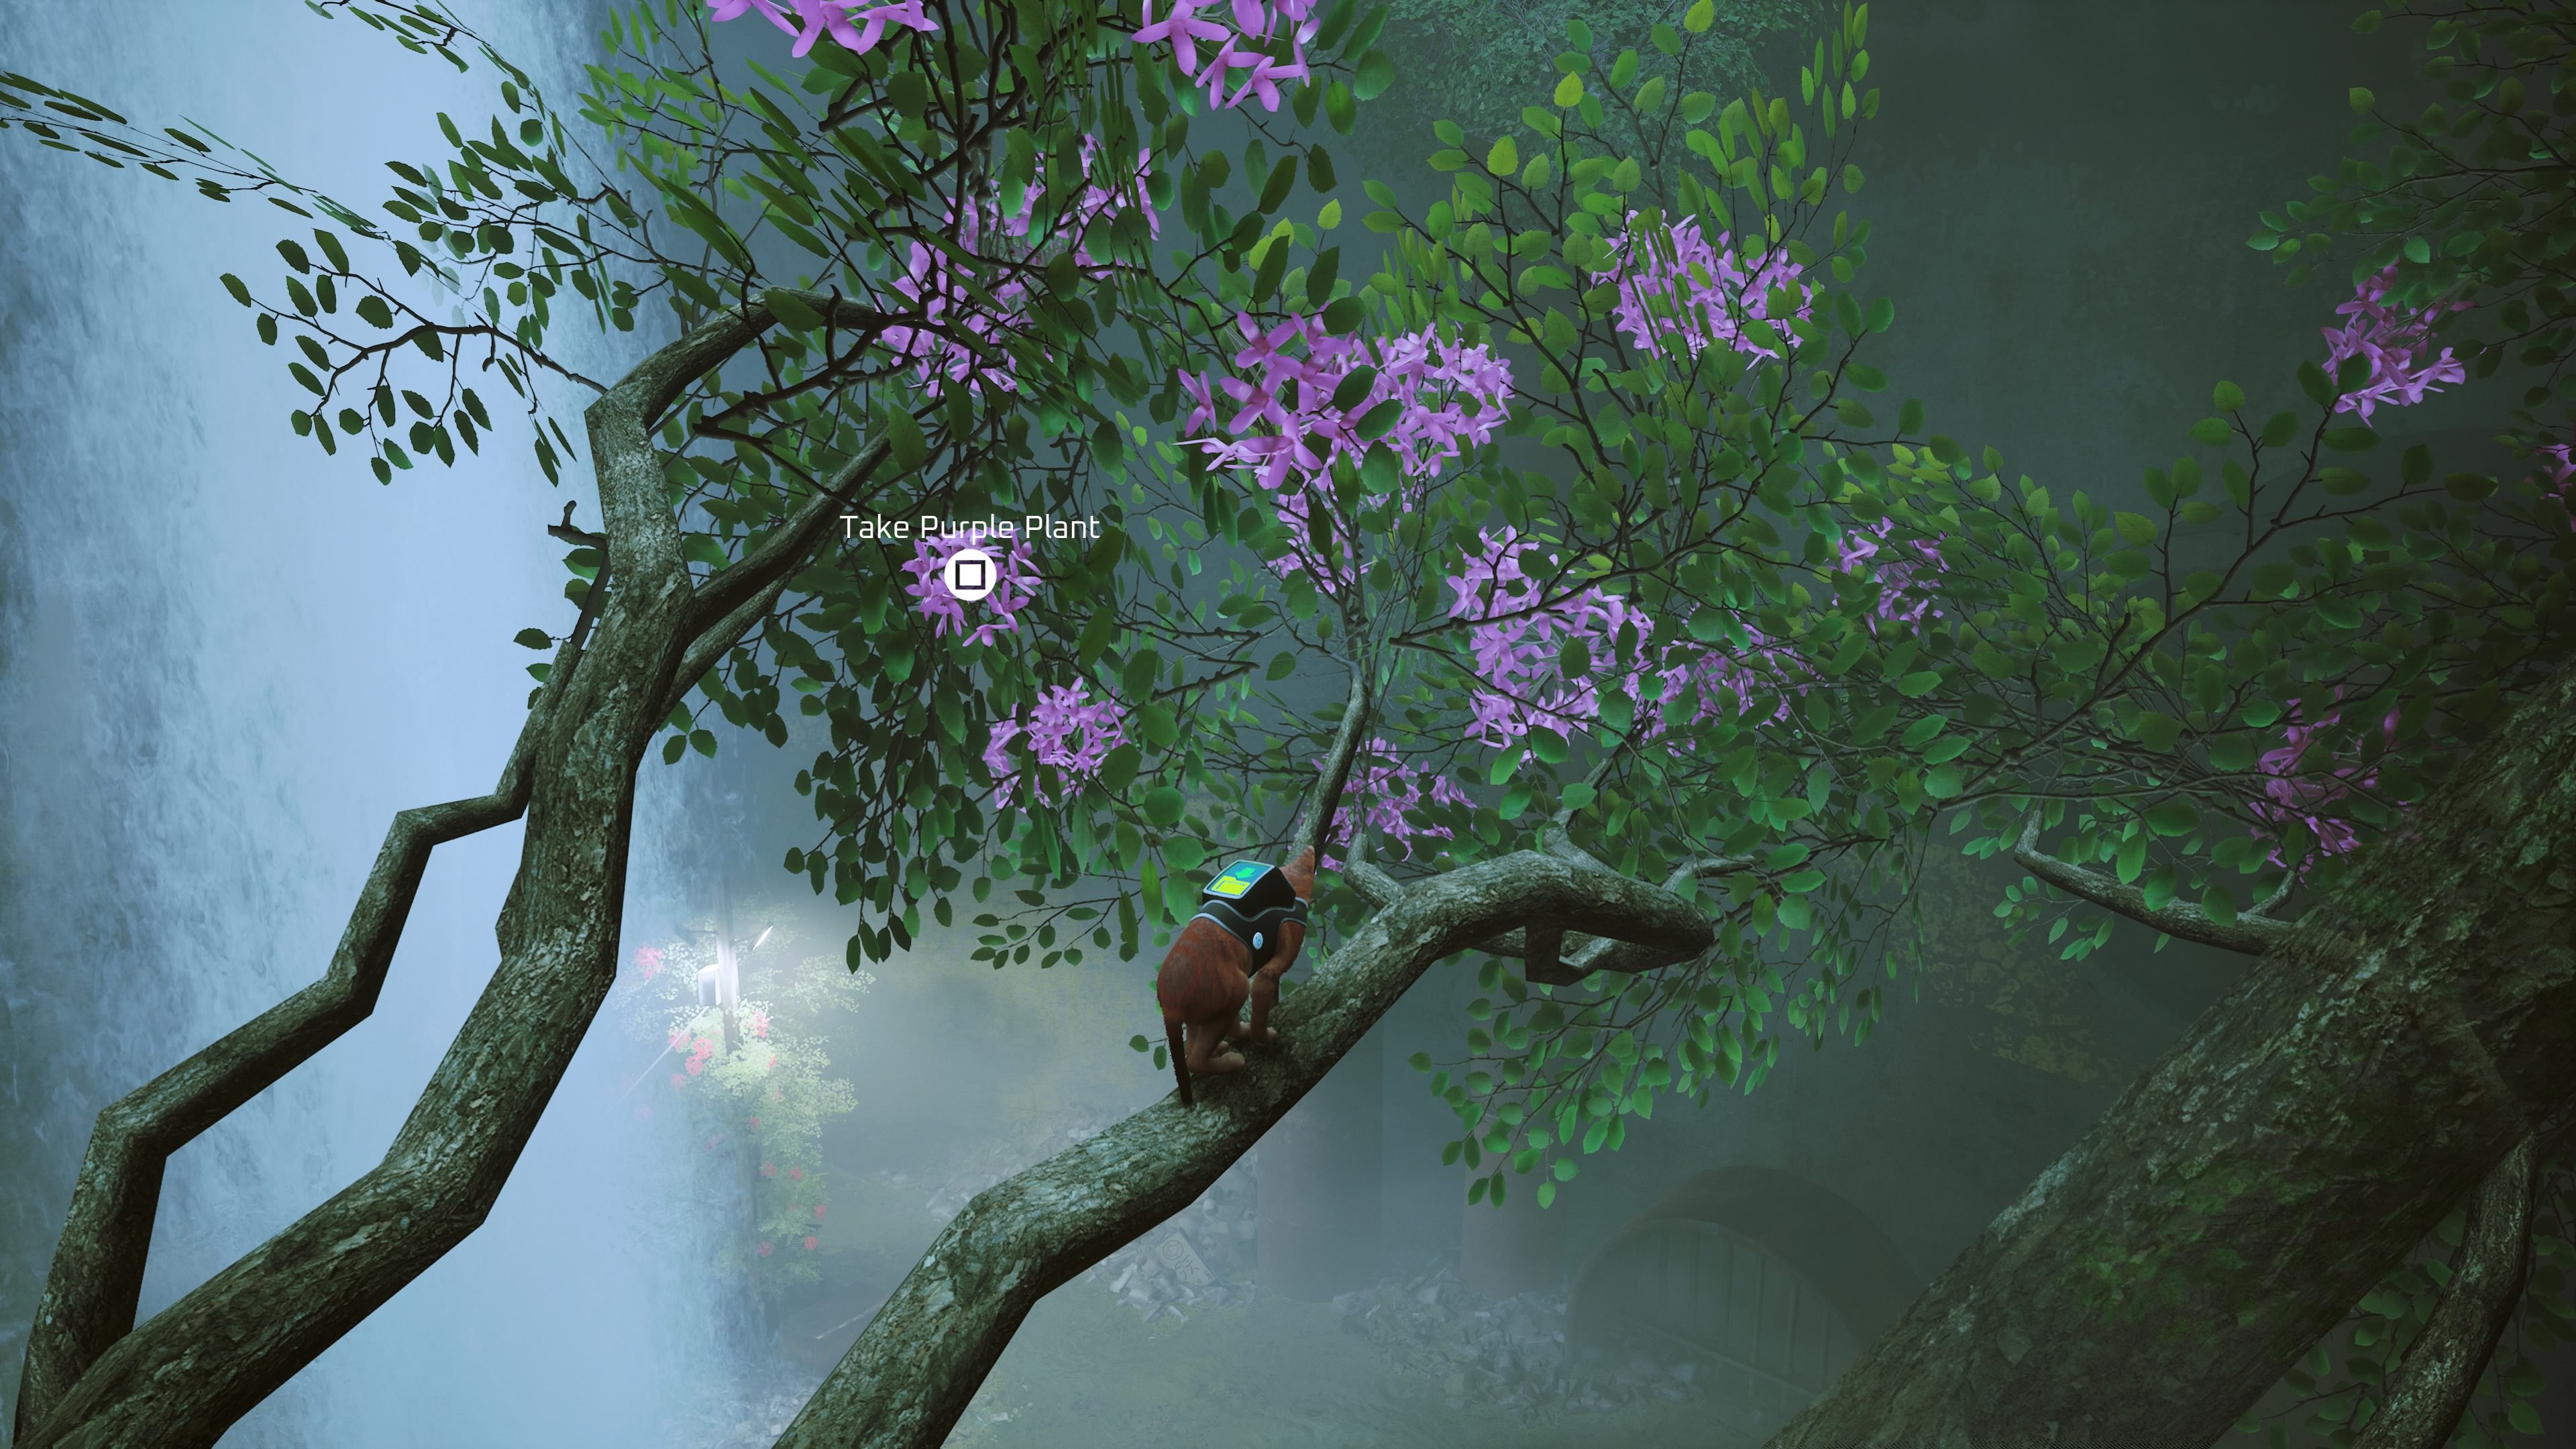 Stray screenshot of a cat climbing up a tree branch.